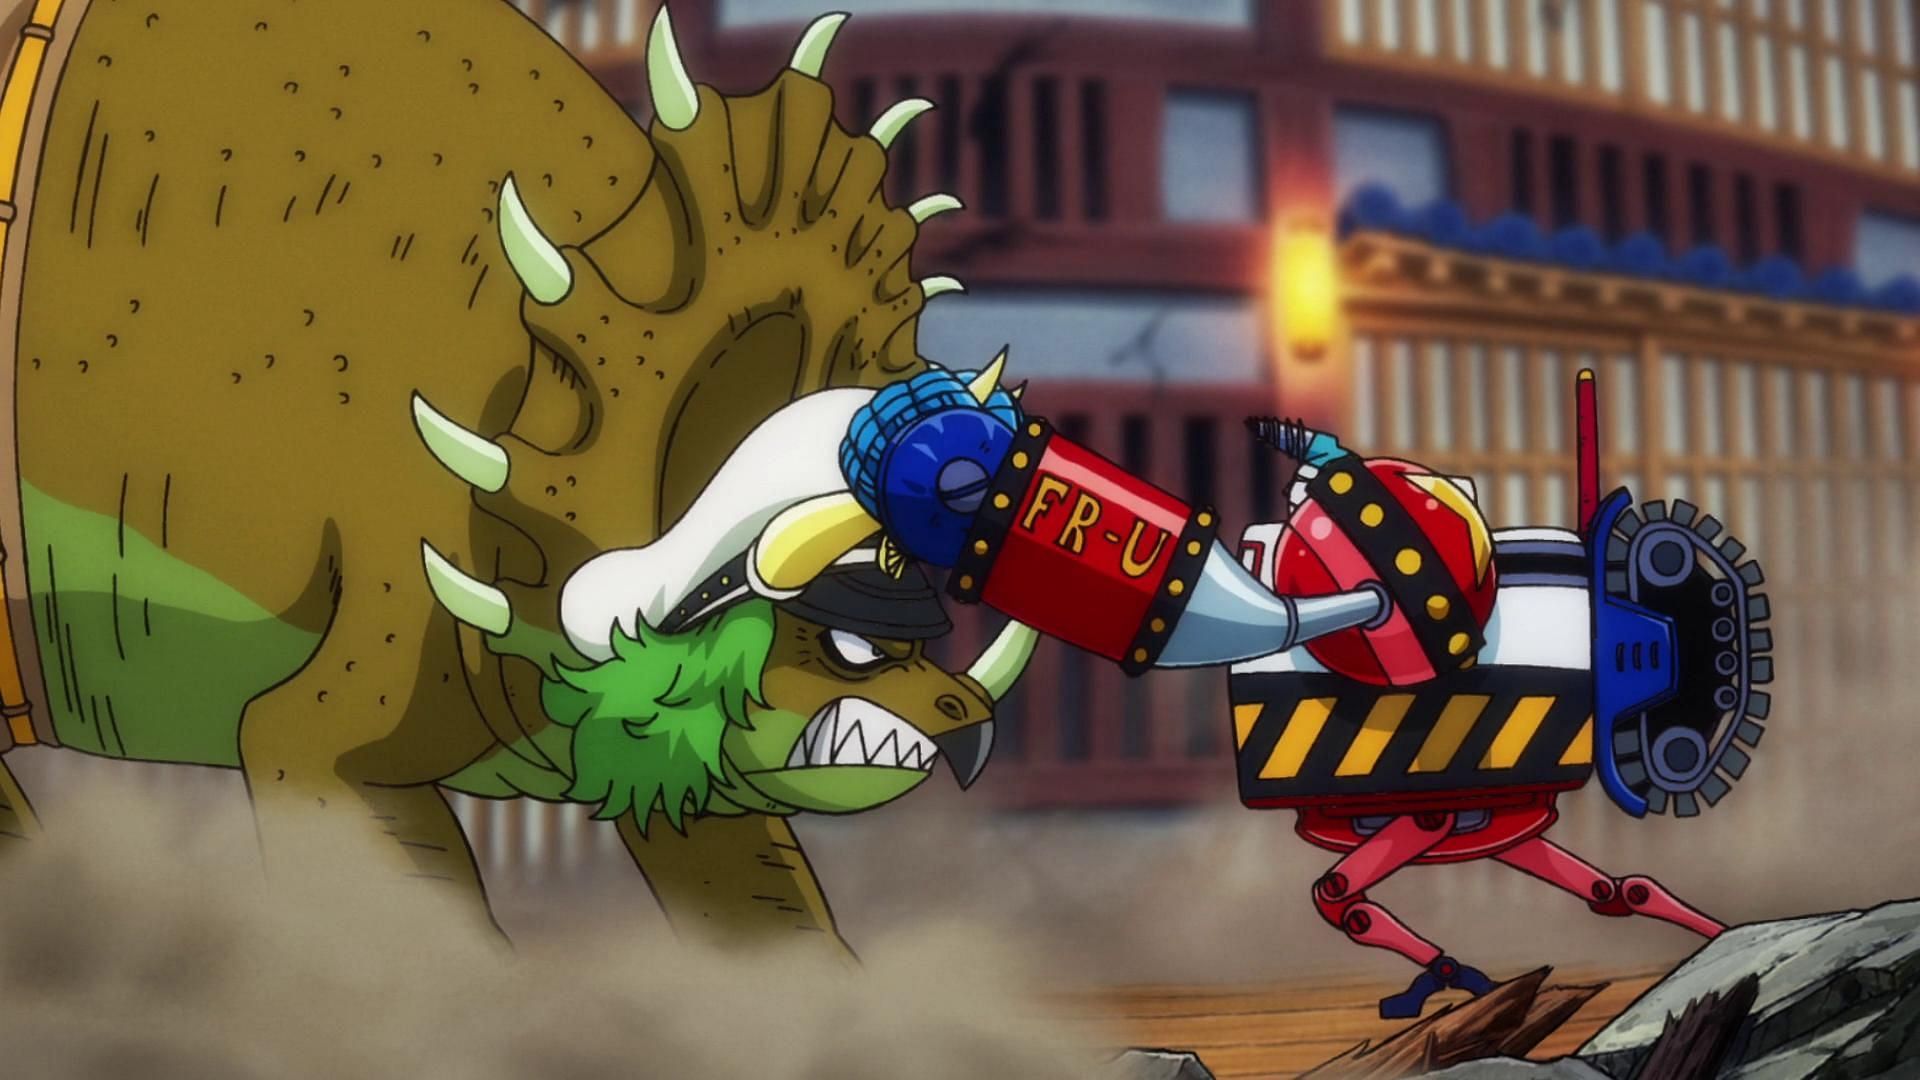 Franky vs Sasaki as seen in the One Piece anime (Image via Toei Animation)